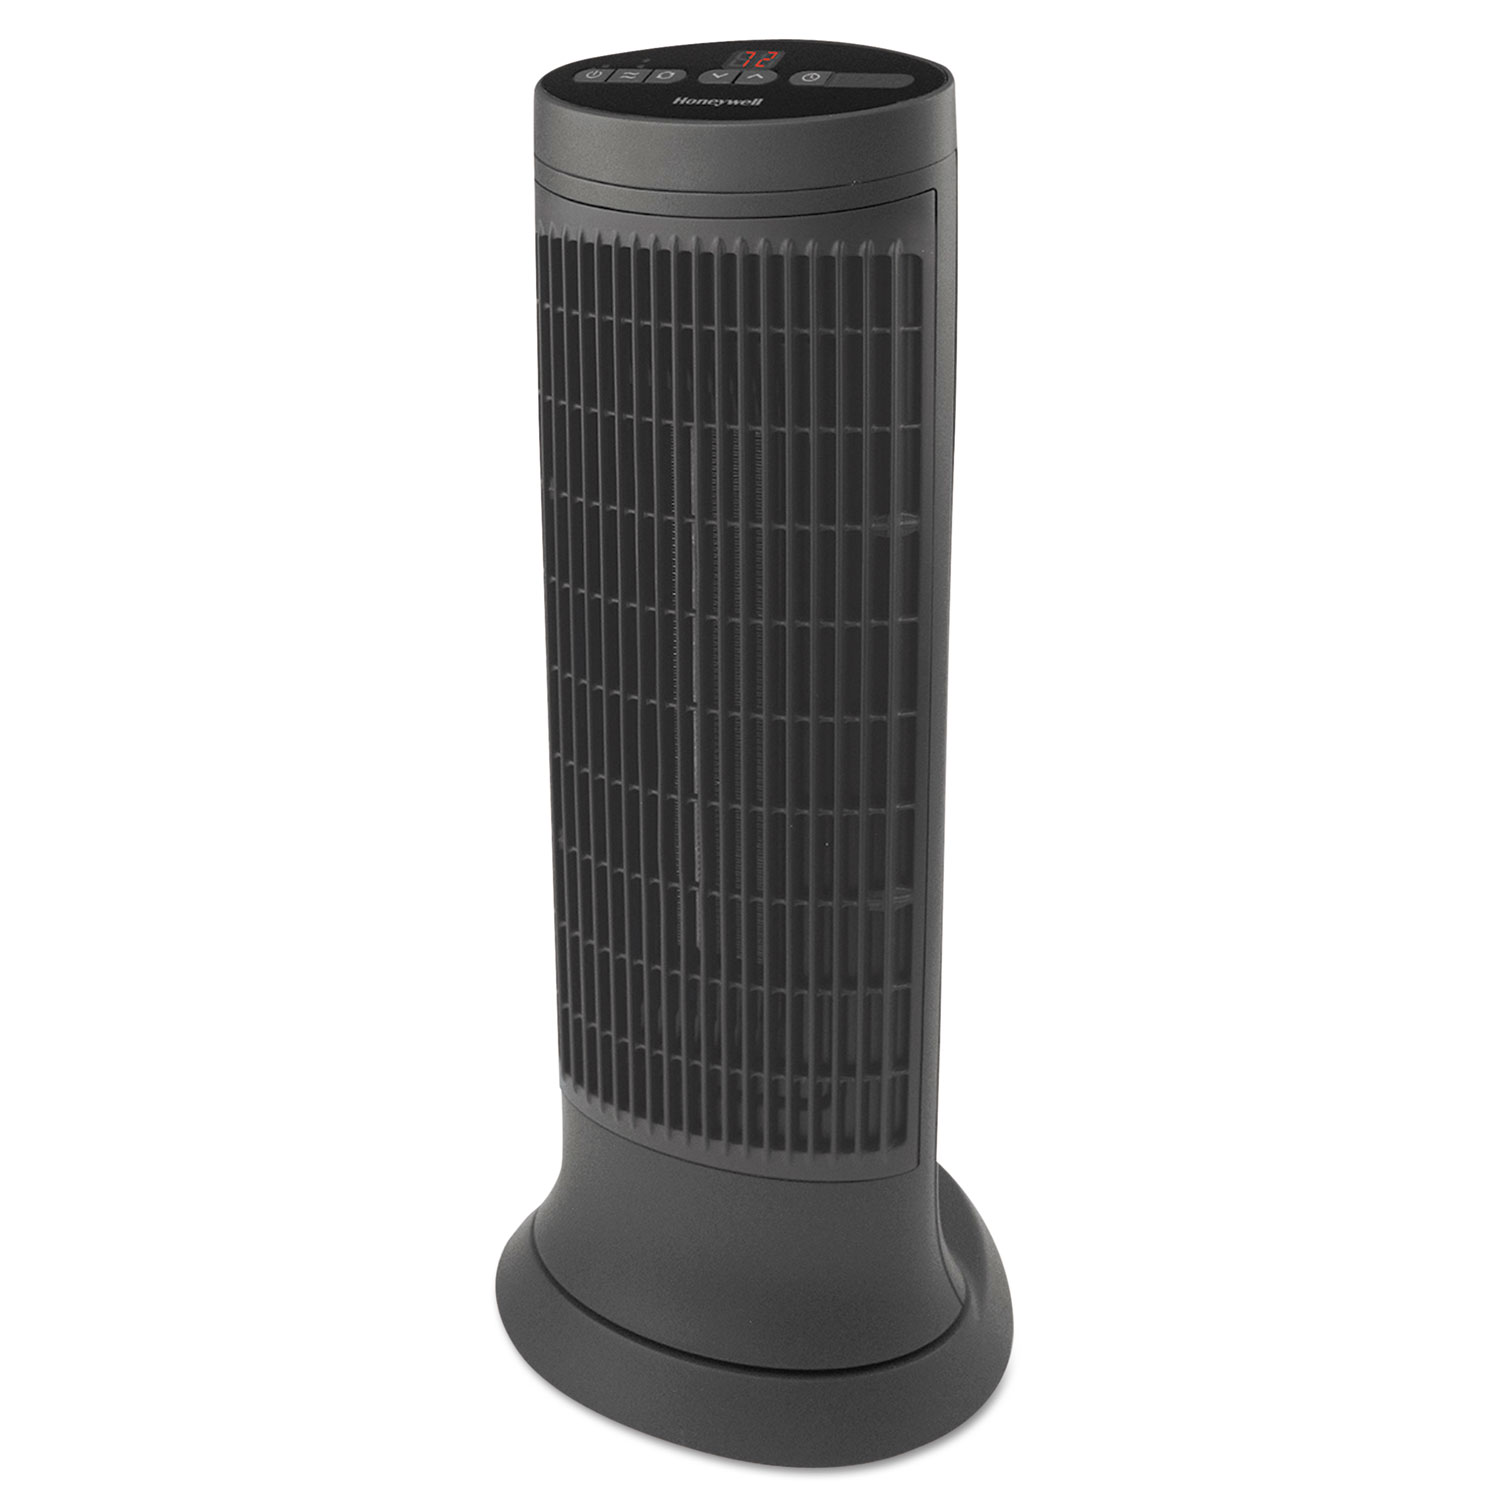  Honeywell HCE322V Digital Tower Heater, 750 - 1500 W, 10 1/8 x 8 x 23 1/4, Black (HWLHCE322V) 